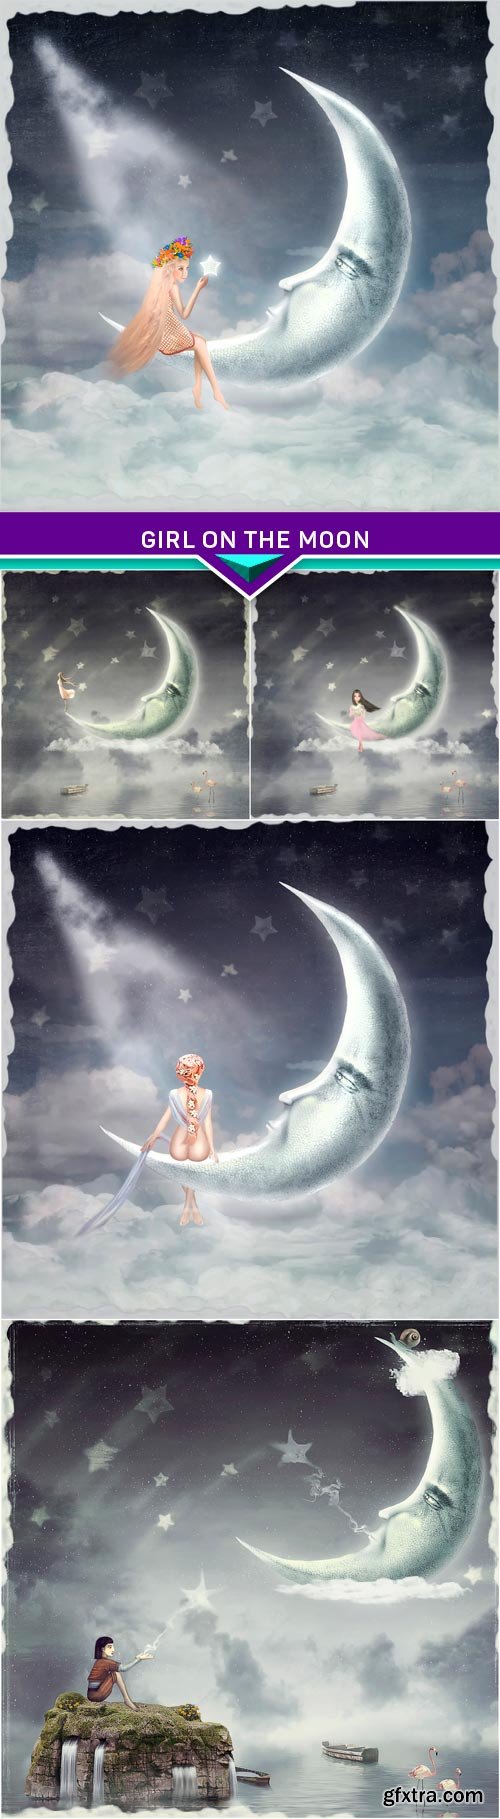 Art illustration of a girl on the moon under the stars 5x JPEG